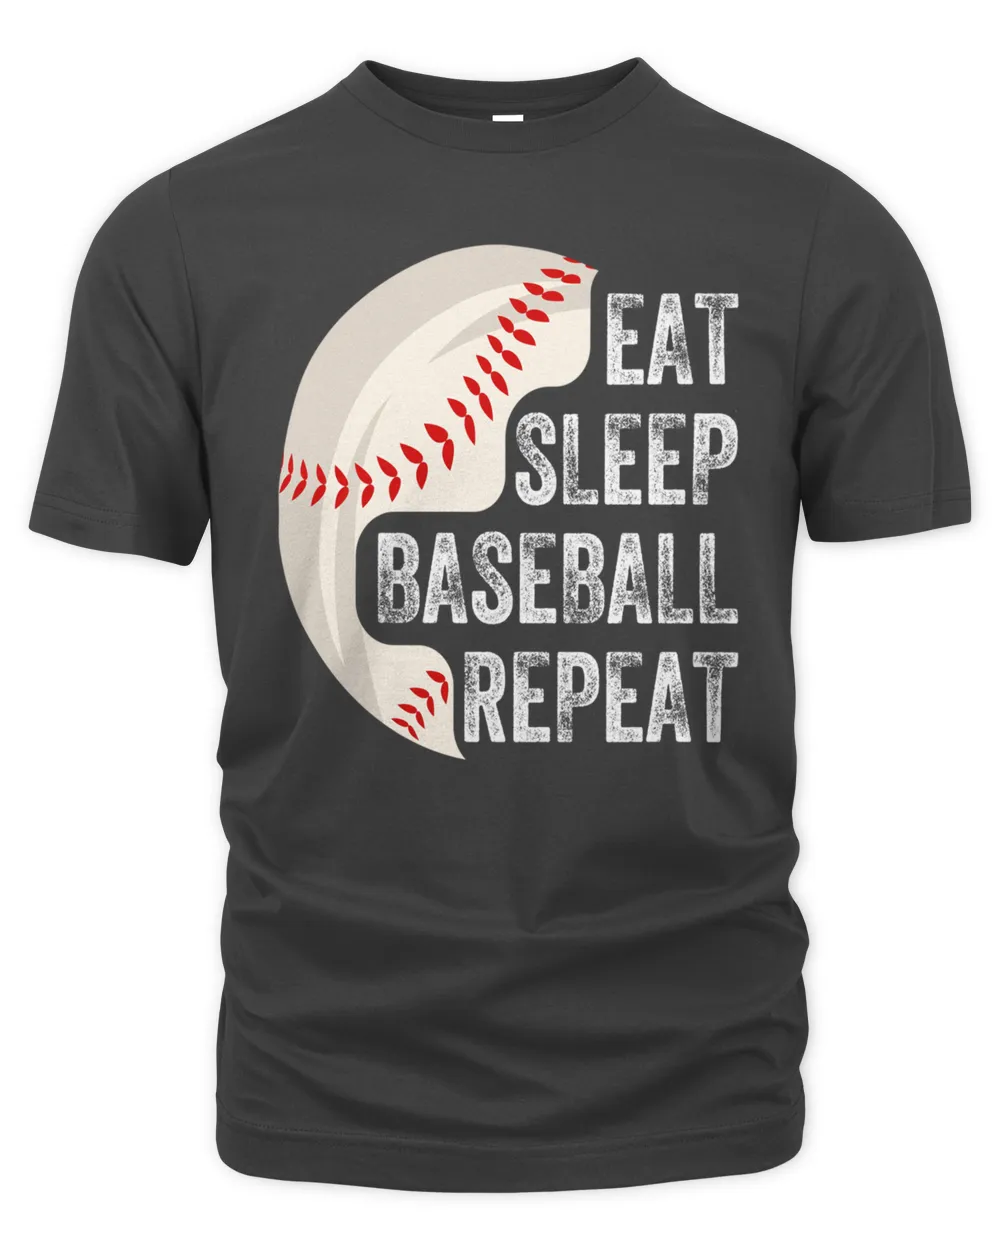 Eat sleep baseball repeat tee